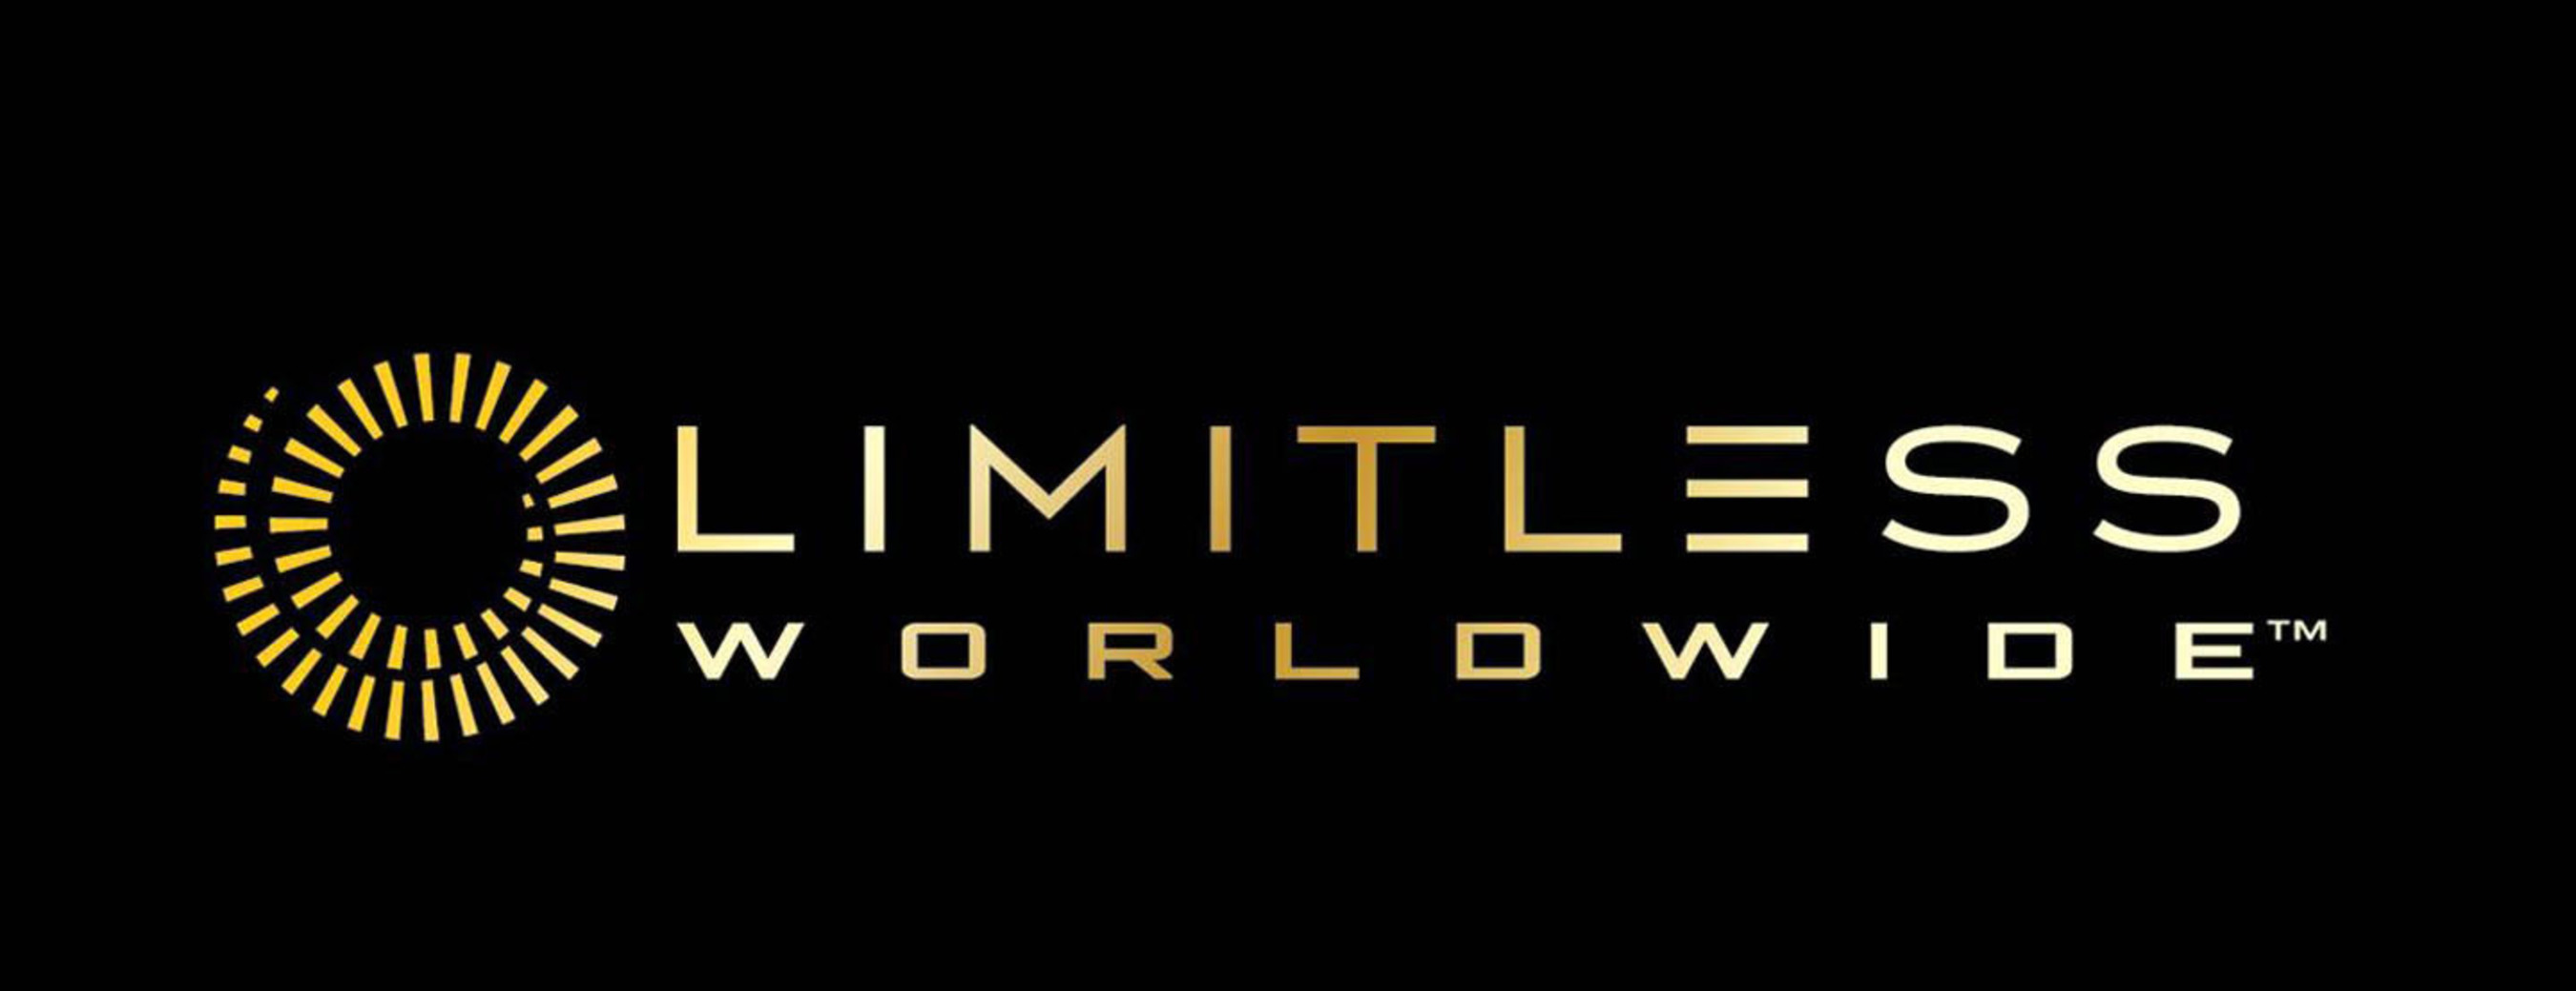 Limitless Worldwide Logo. (PRNewsFoto/Limitless Worldwide, LLC) (PRNewsFoto/LIMITLESS WORLDWIDE, LLC)